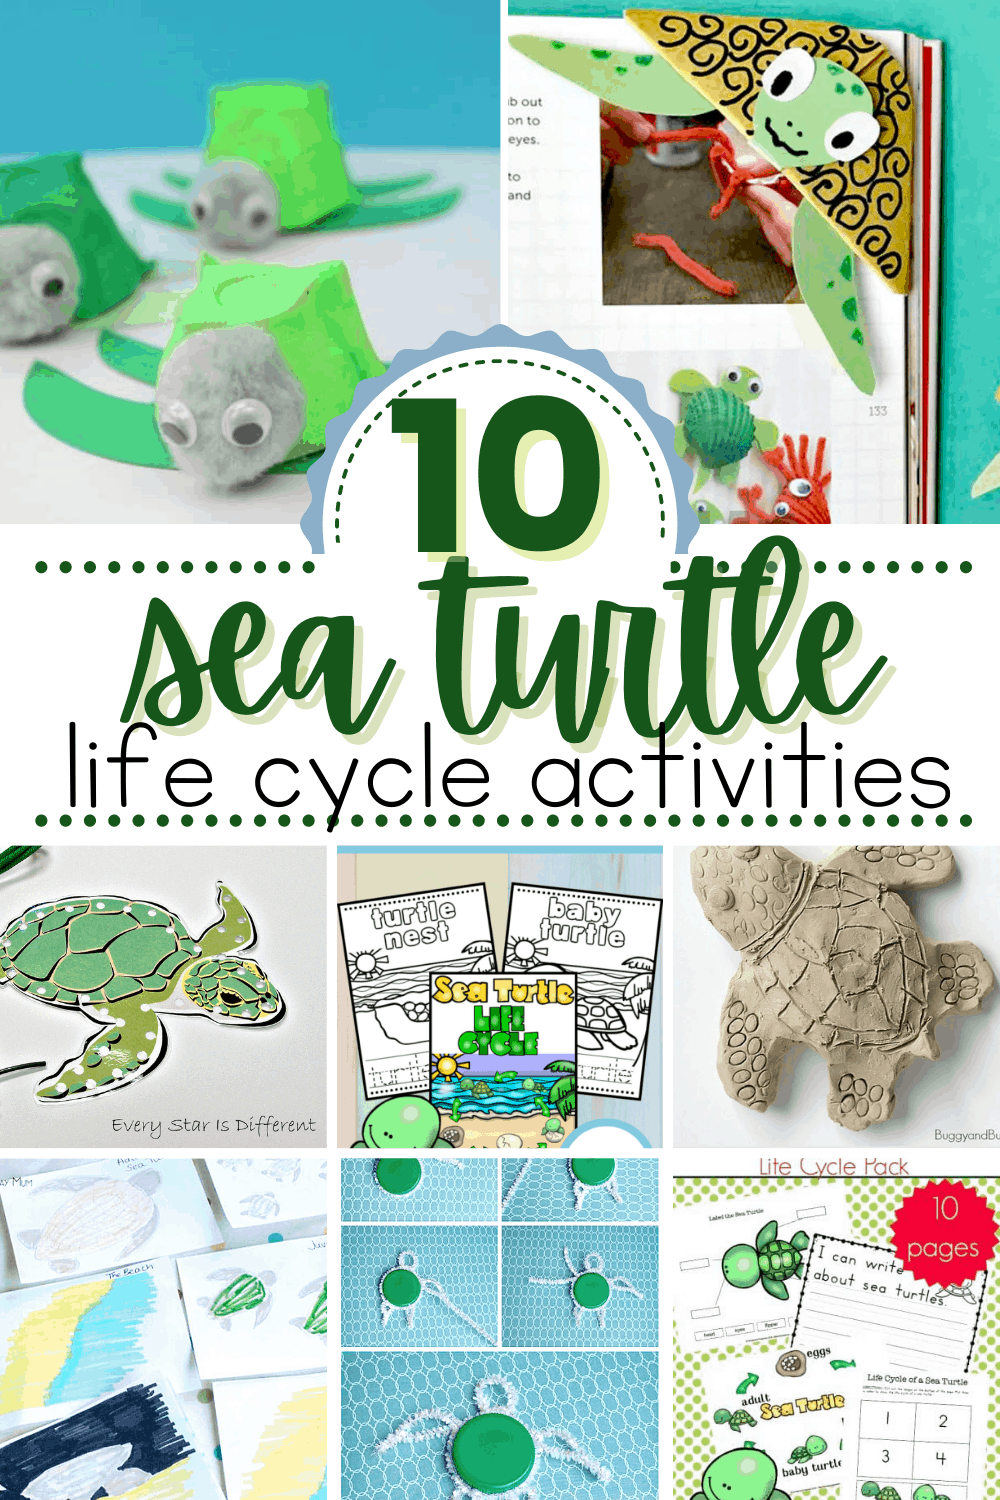 Sea Turtle Life Cycle Activities